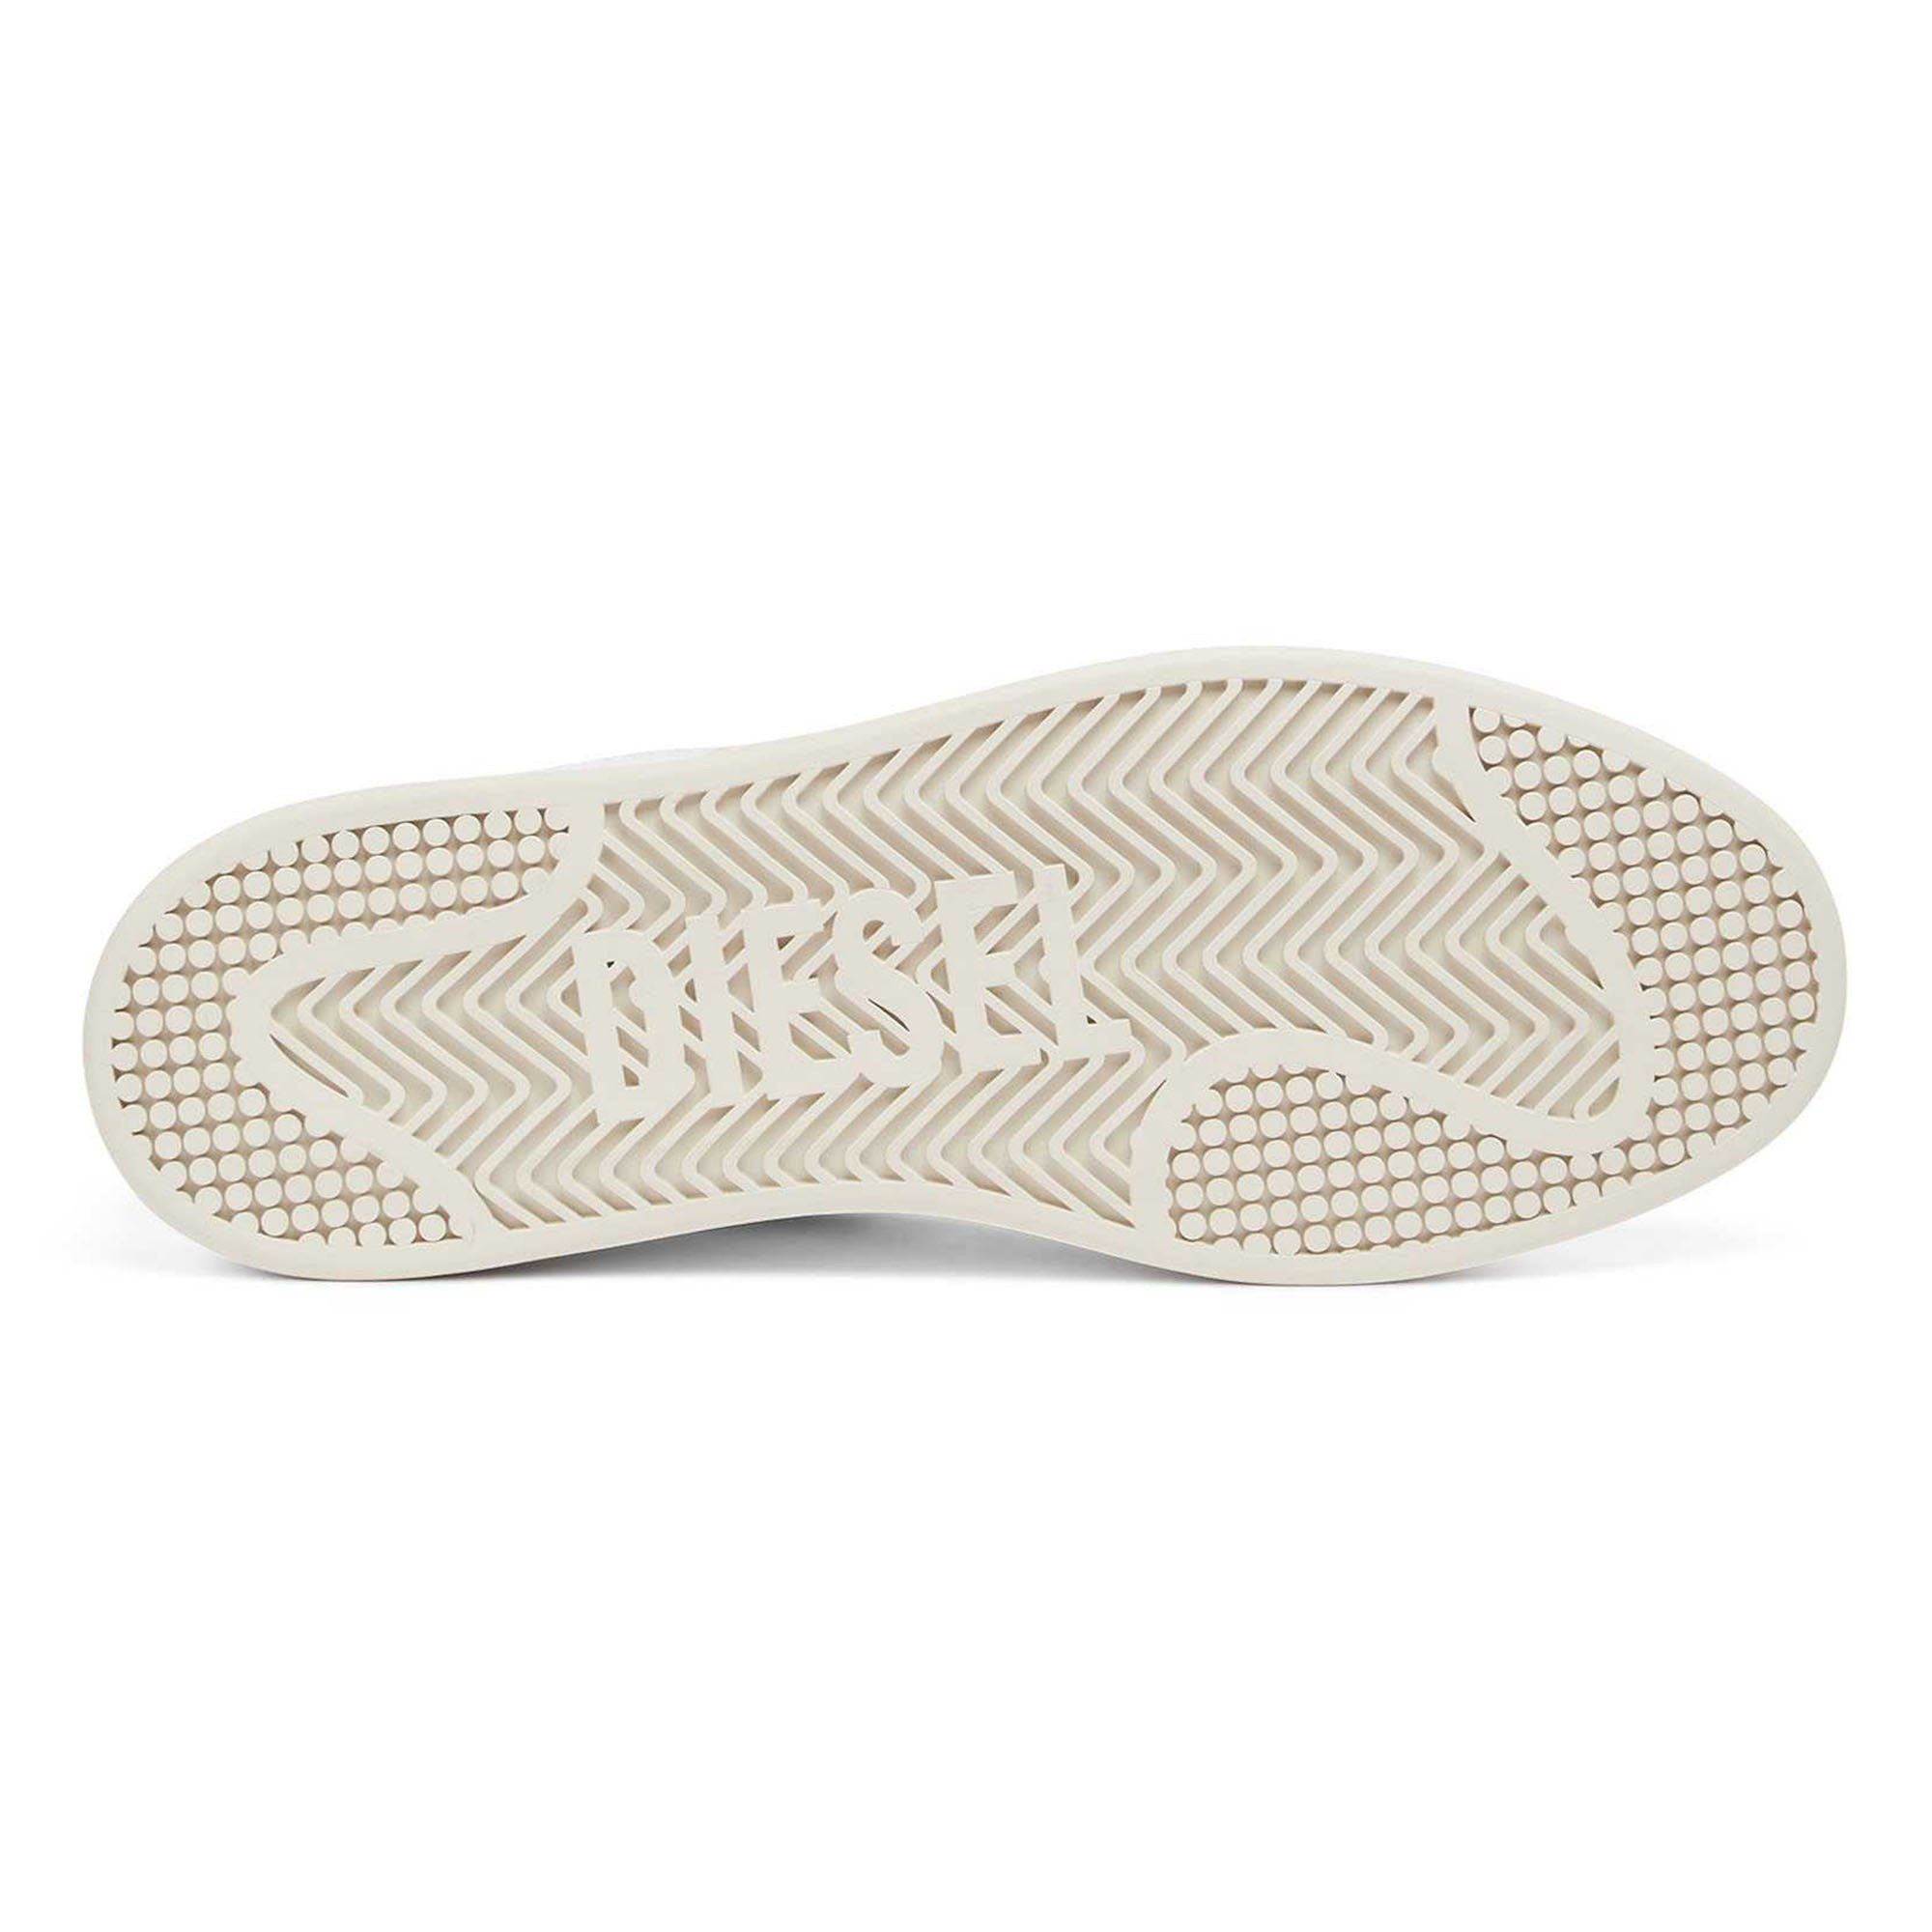 Diesel Herren Low Sneaker - Weiß/Grau S-ATHENE, Sneaker Schnür-Schuhe, Low